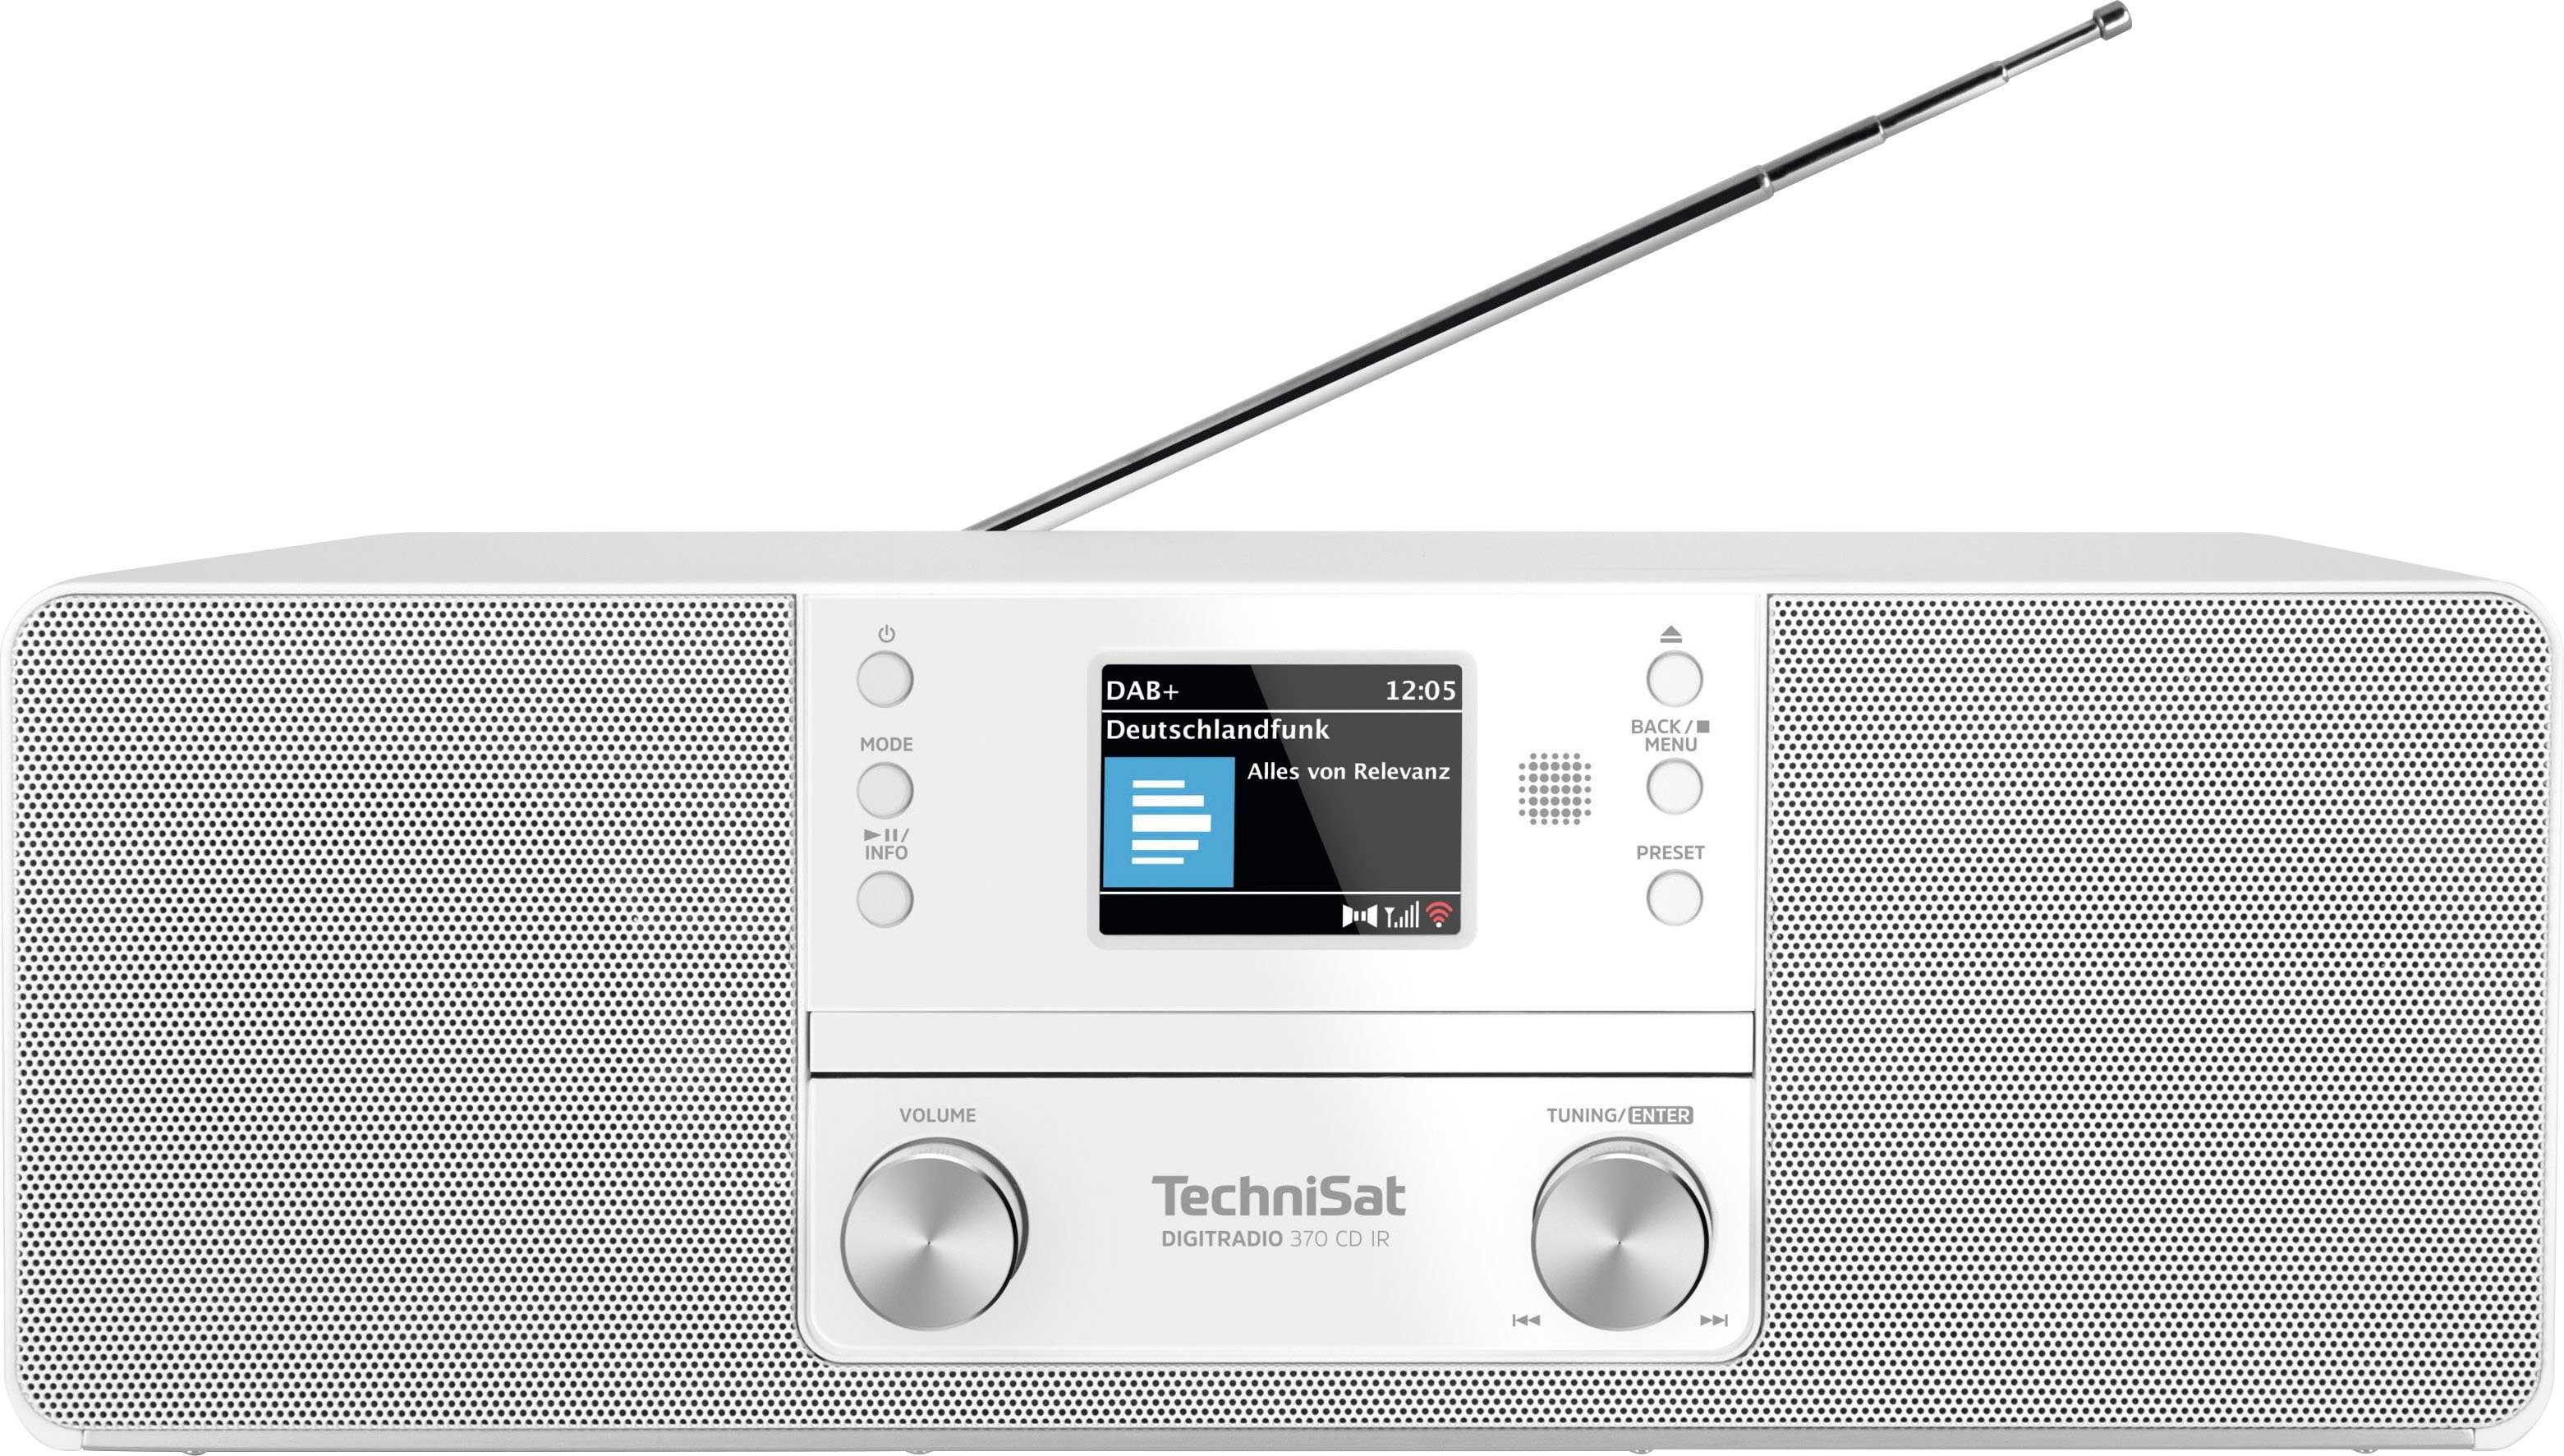 DIGITRADIO IR TechniSat (DAB), Digitalradio (DAB) 10 RDS, CD W) 370 weiß (Digitalradio mit UKW